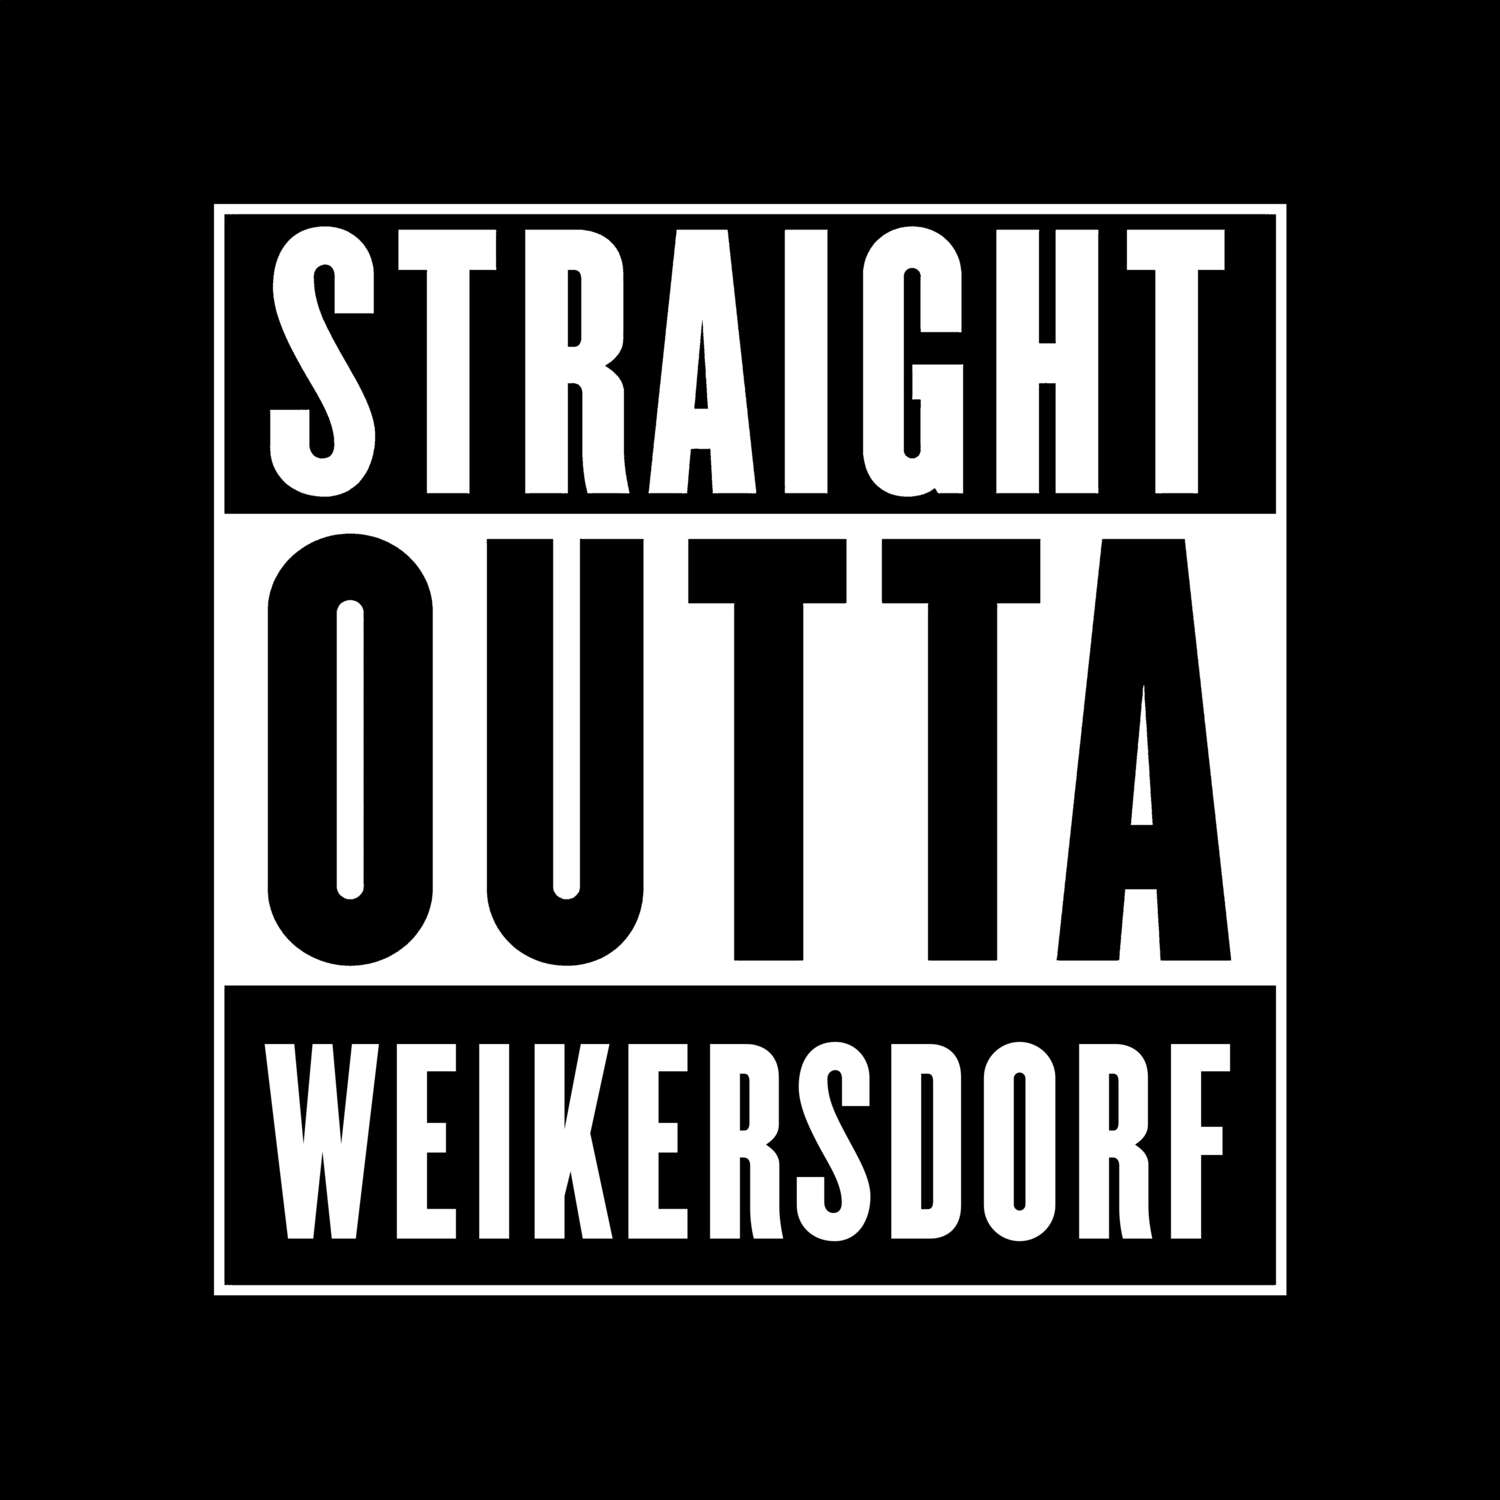 Weikersdorf T-Shirt »Straight Outta«